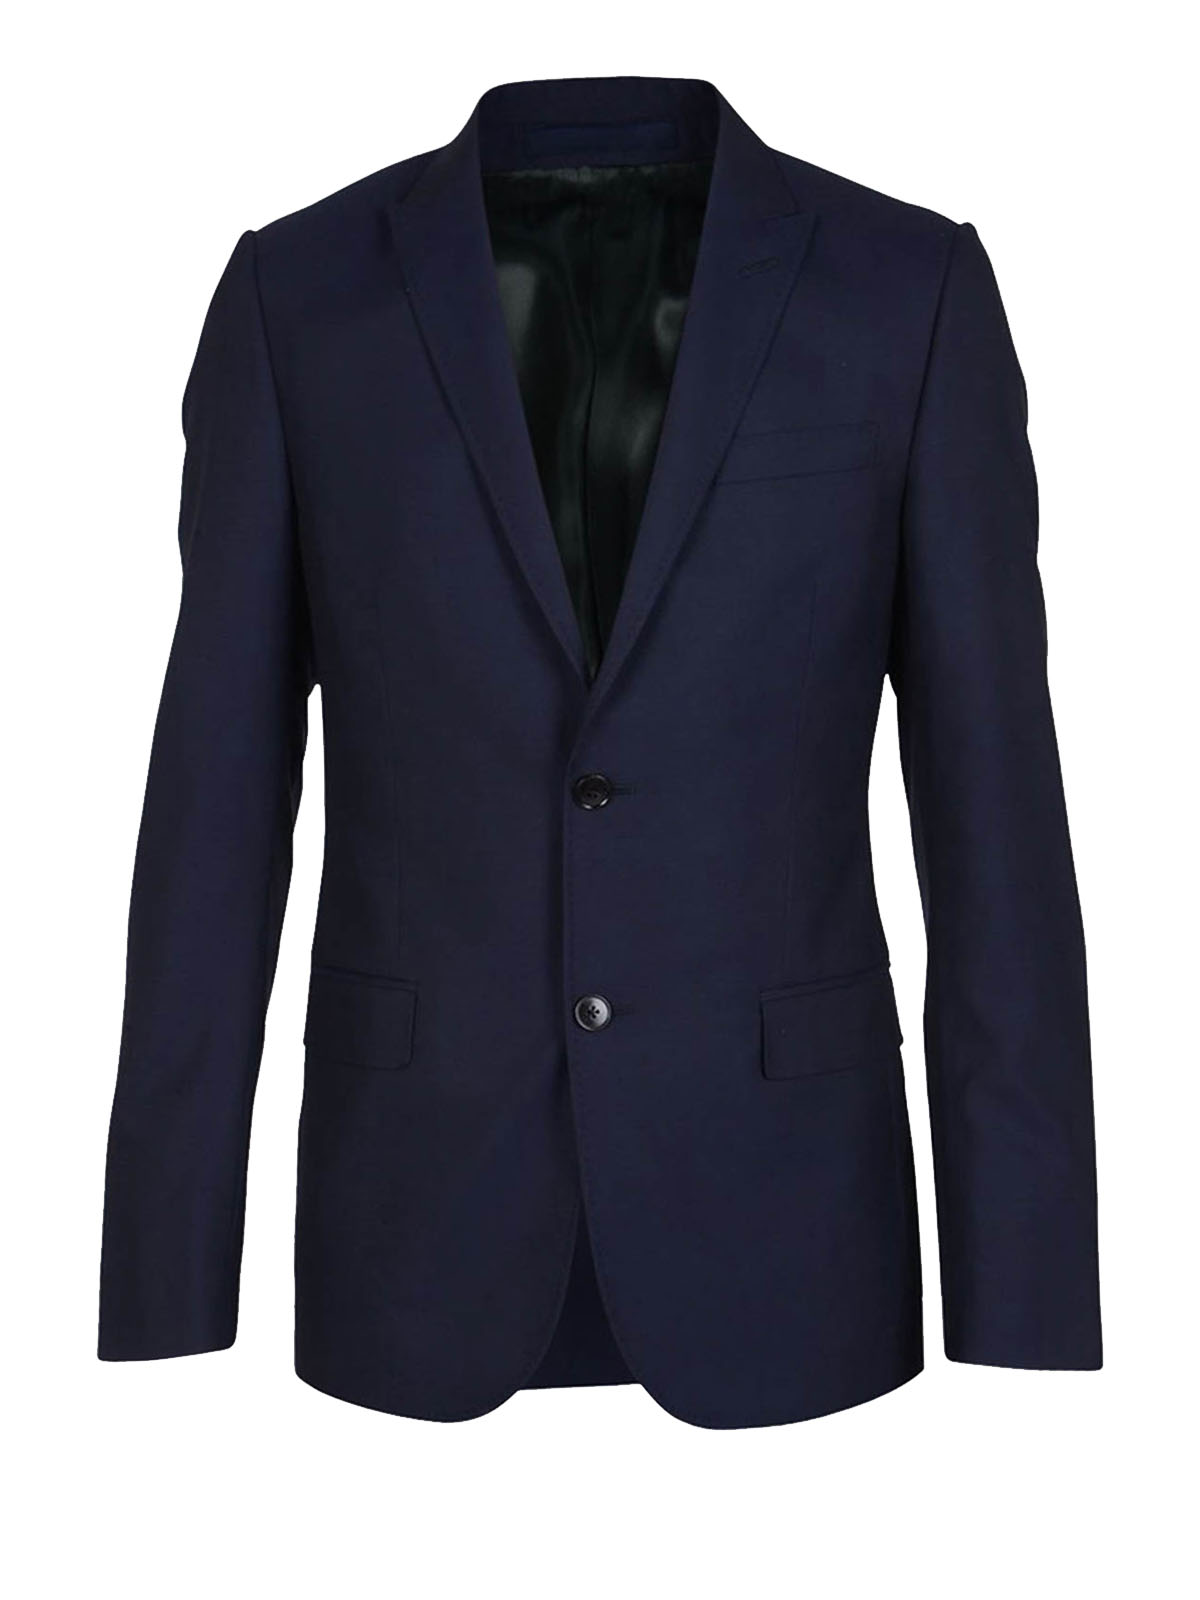 Gucci - Formal wool suit - formal suits - 406136Z29864440 | iKRIX.com